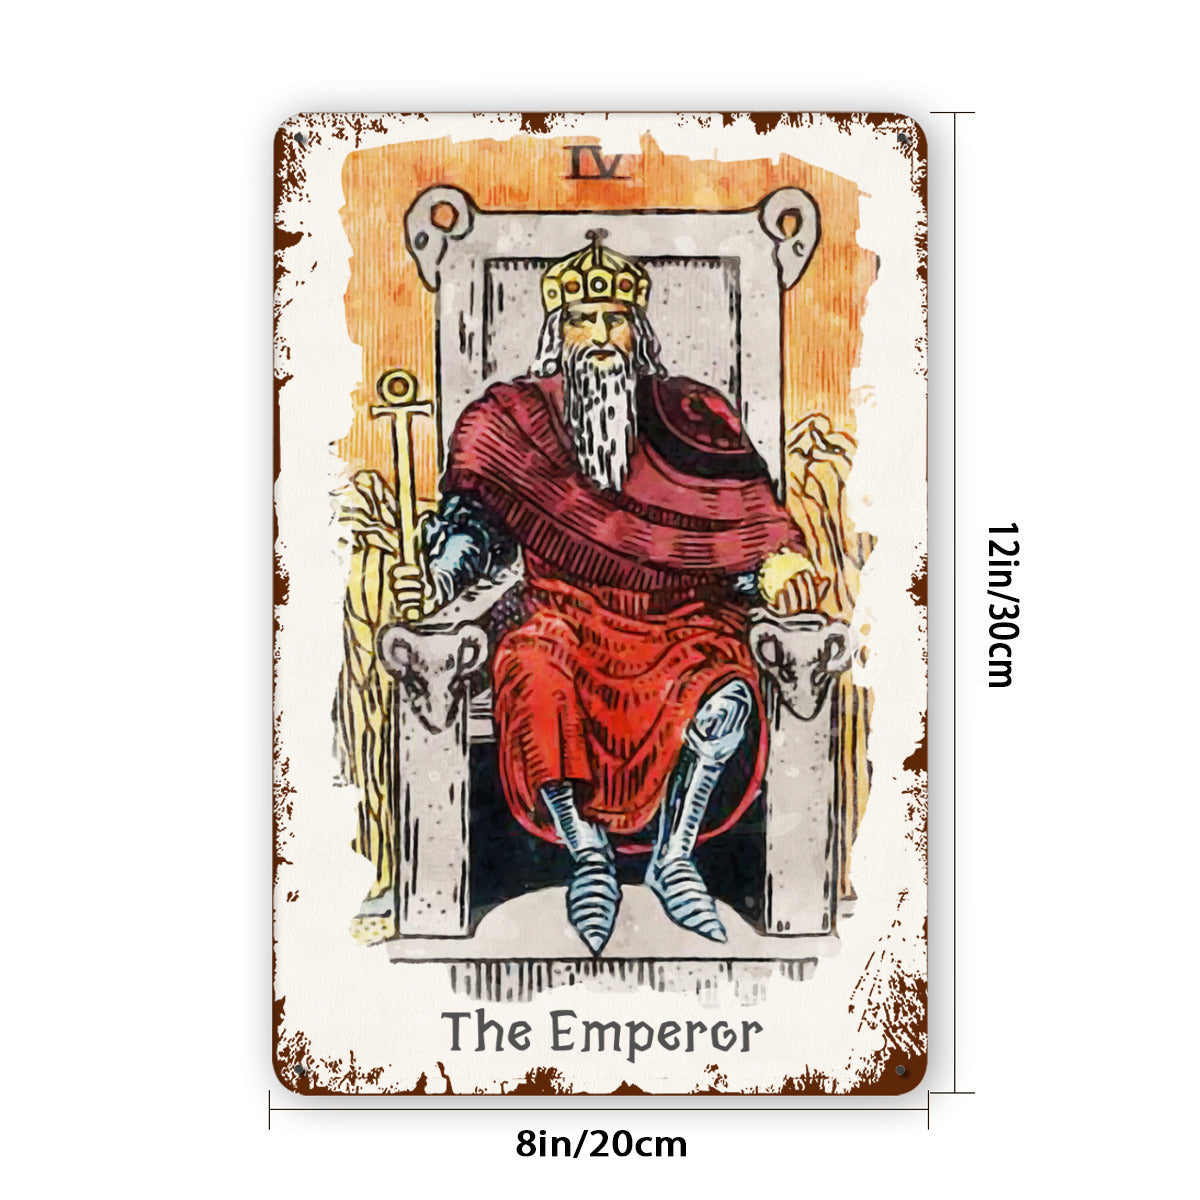 Tin Sign Of The Emperor Tarot Card Painting • Major Arcana Waite-Style Cards Vintage Metal Print • Apollo Tarot Design Shop